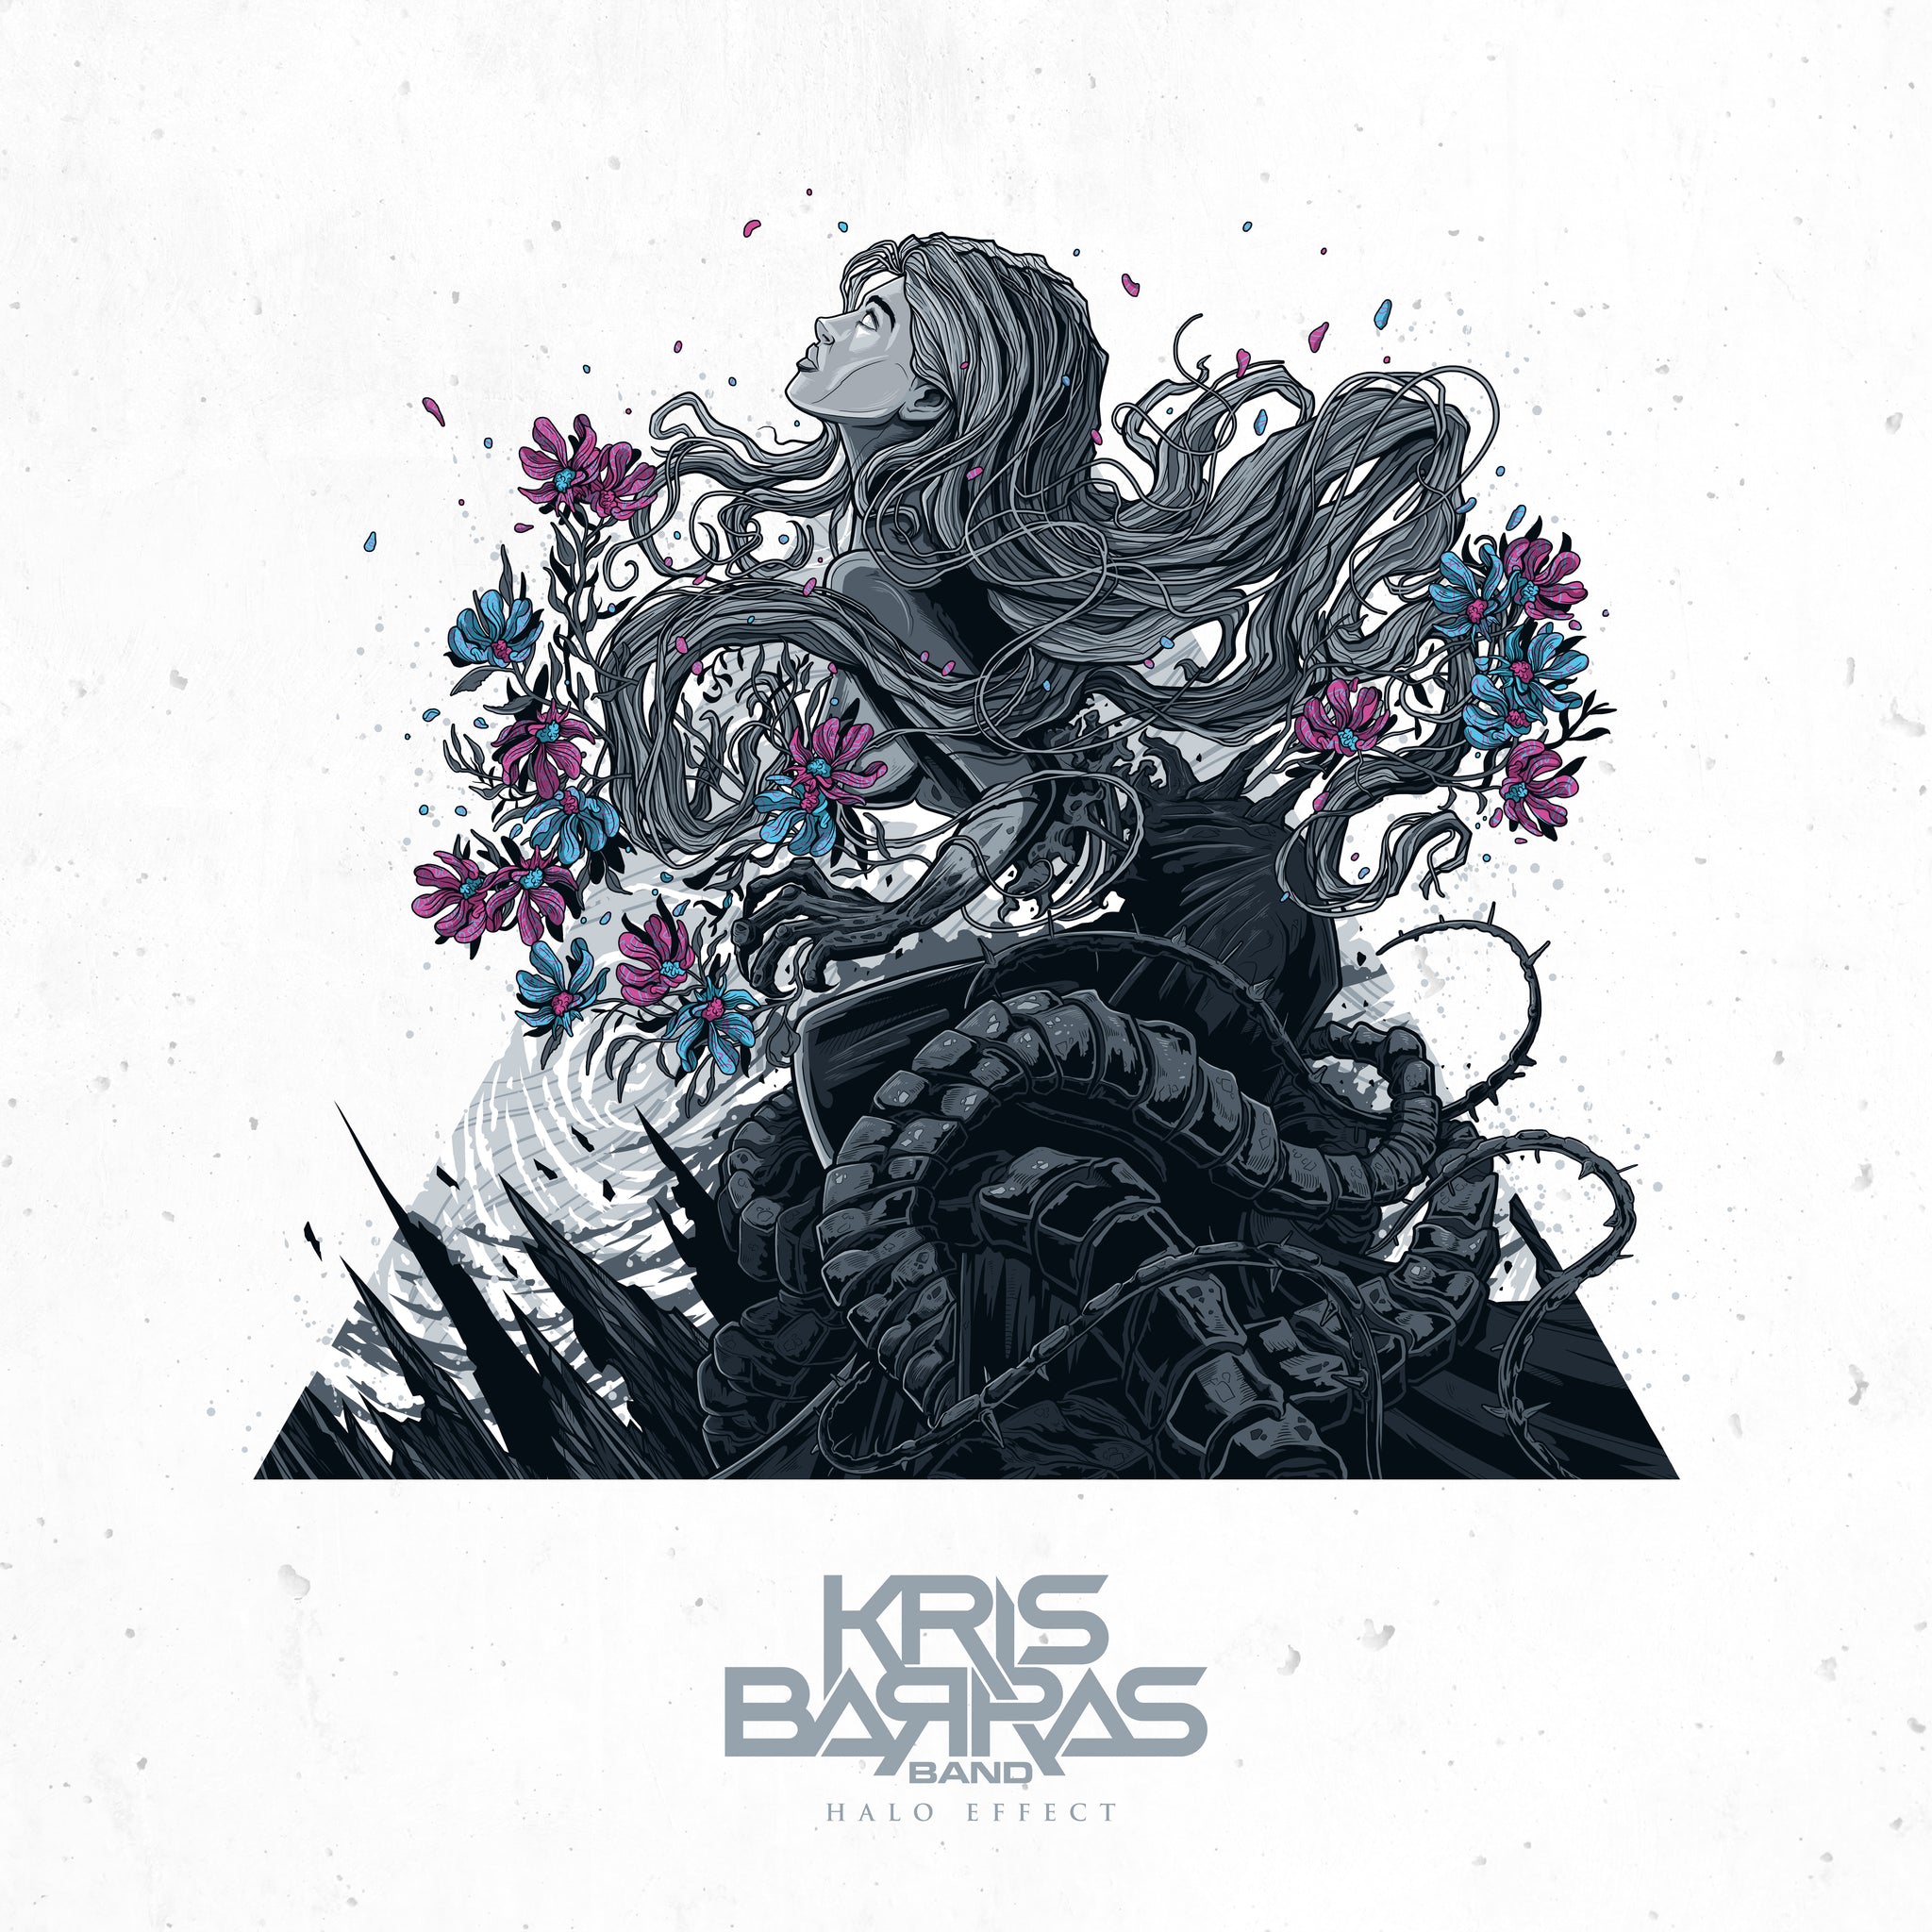 Kris Barras Band "Halo Effect" Digital Download